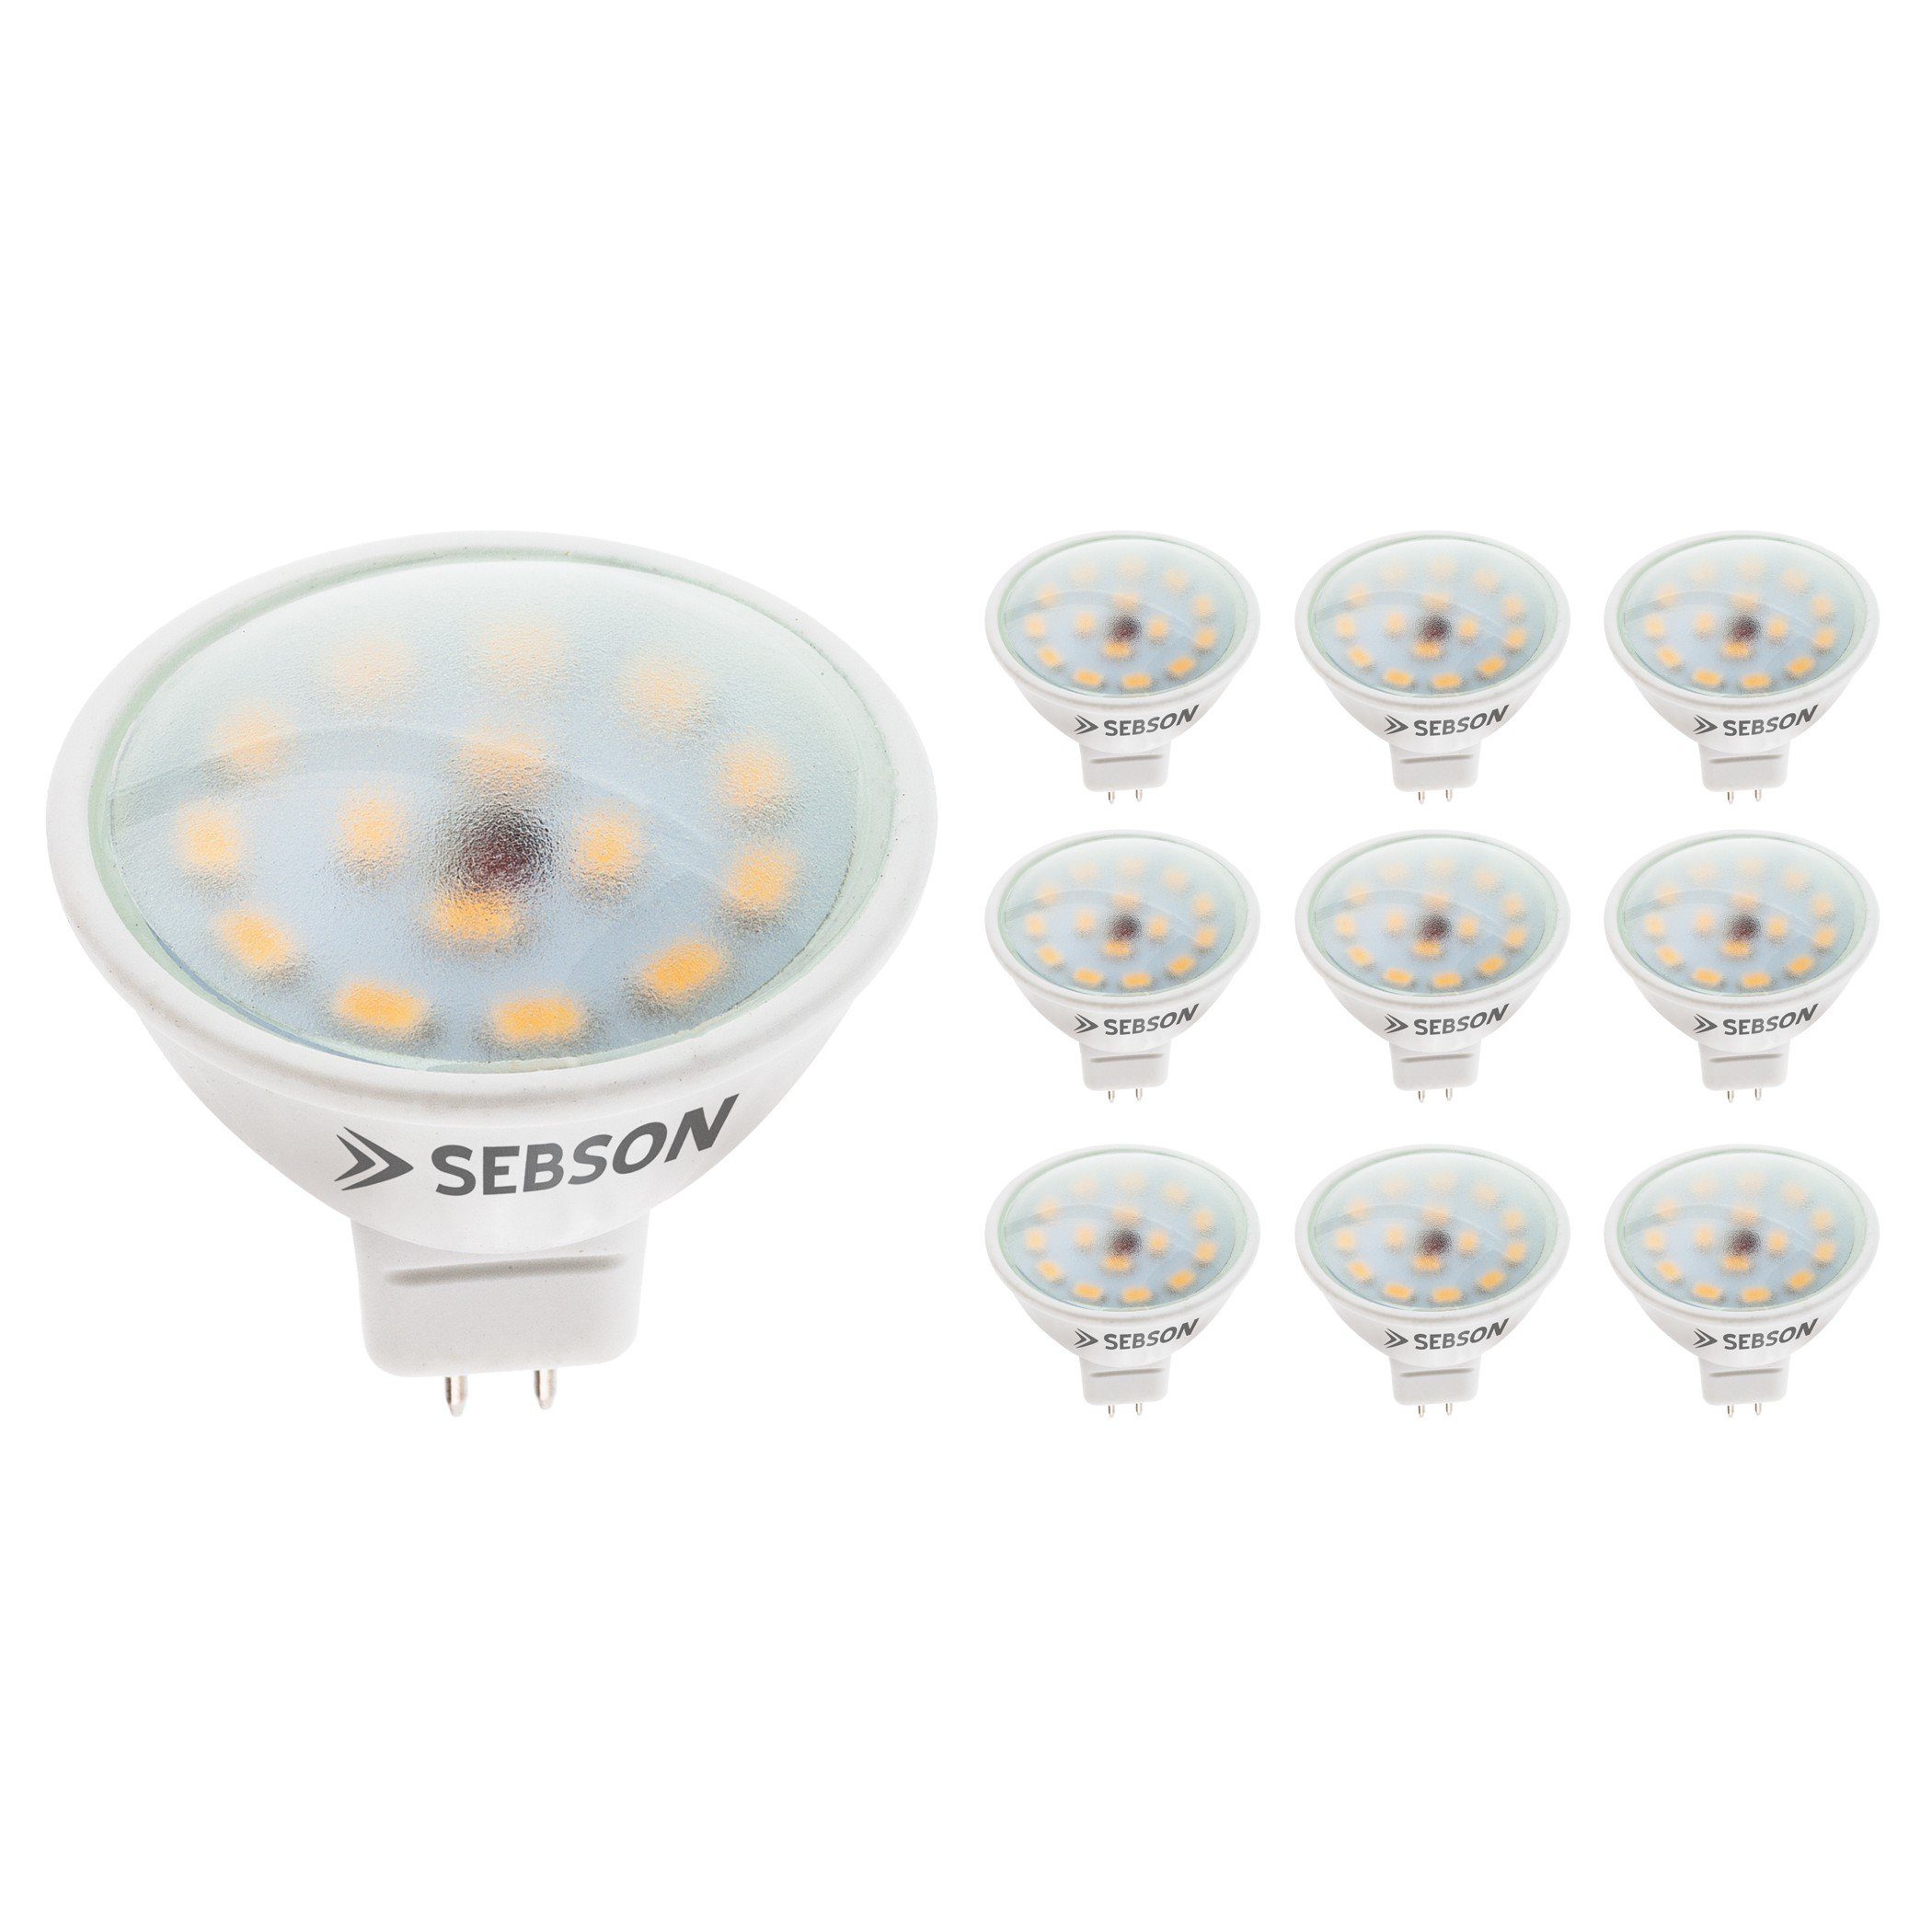 SEBSON LED Lampe GU5.3 / MR16 warmweiß 5W 380 Lumen, 12V DC, Leuchtmittel  110°, 10er Pack LED-Leuchtmittel